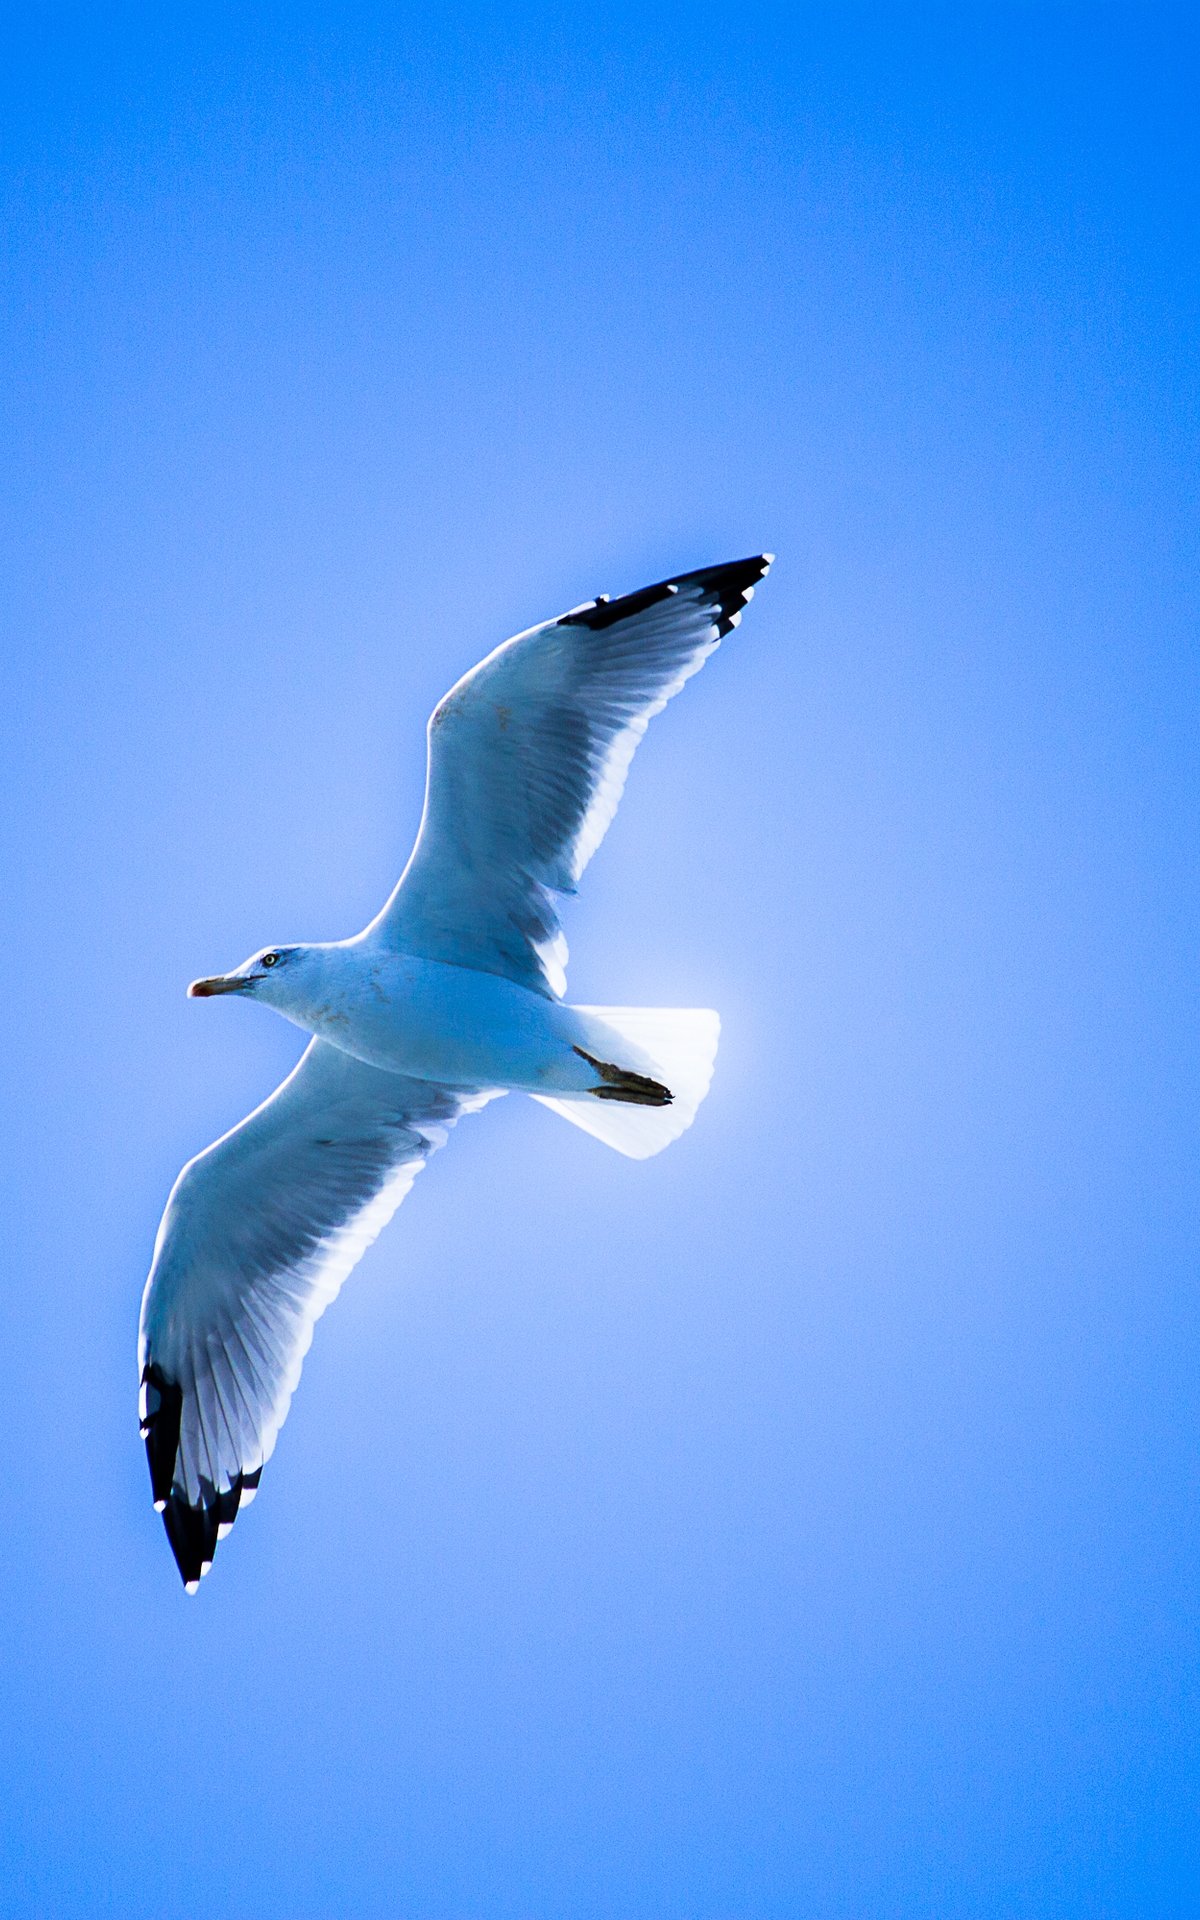 Image: Seagull, bird, flying, flies, sky, blue, clean